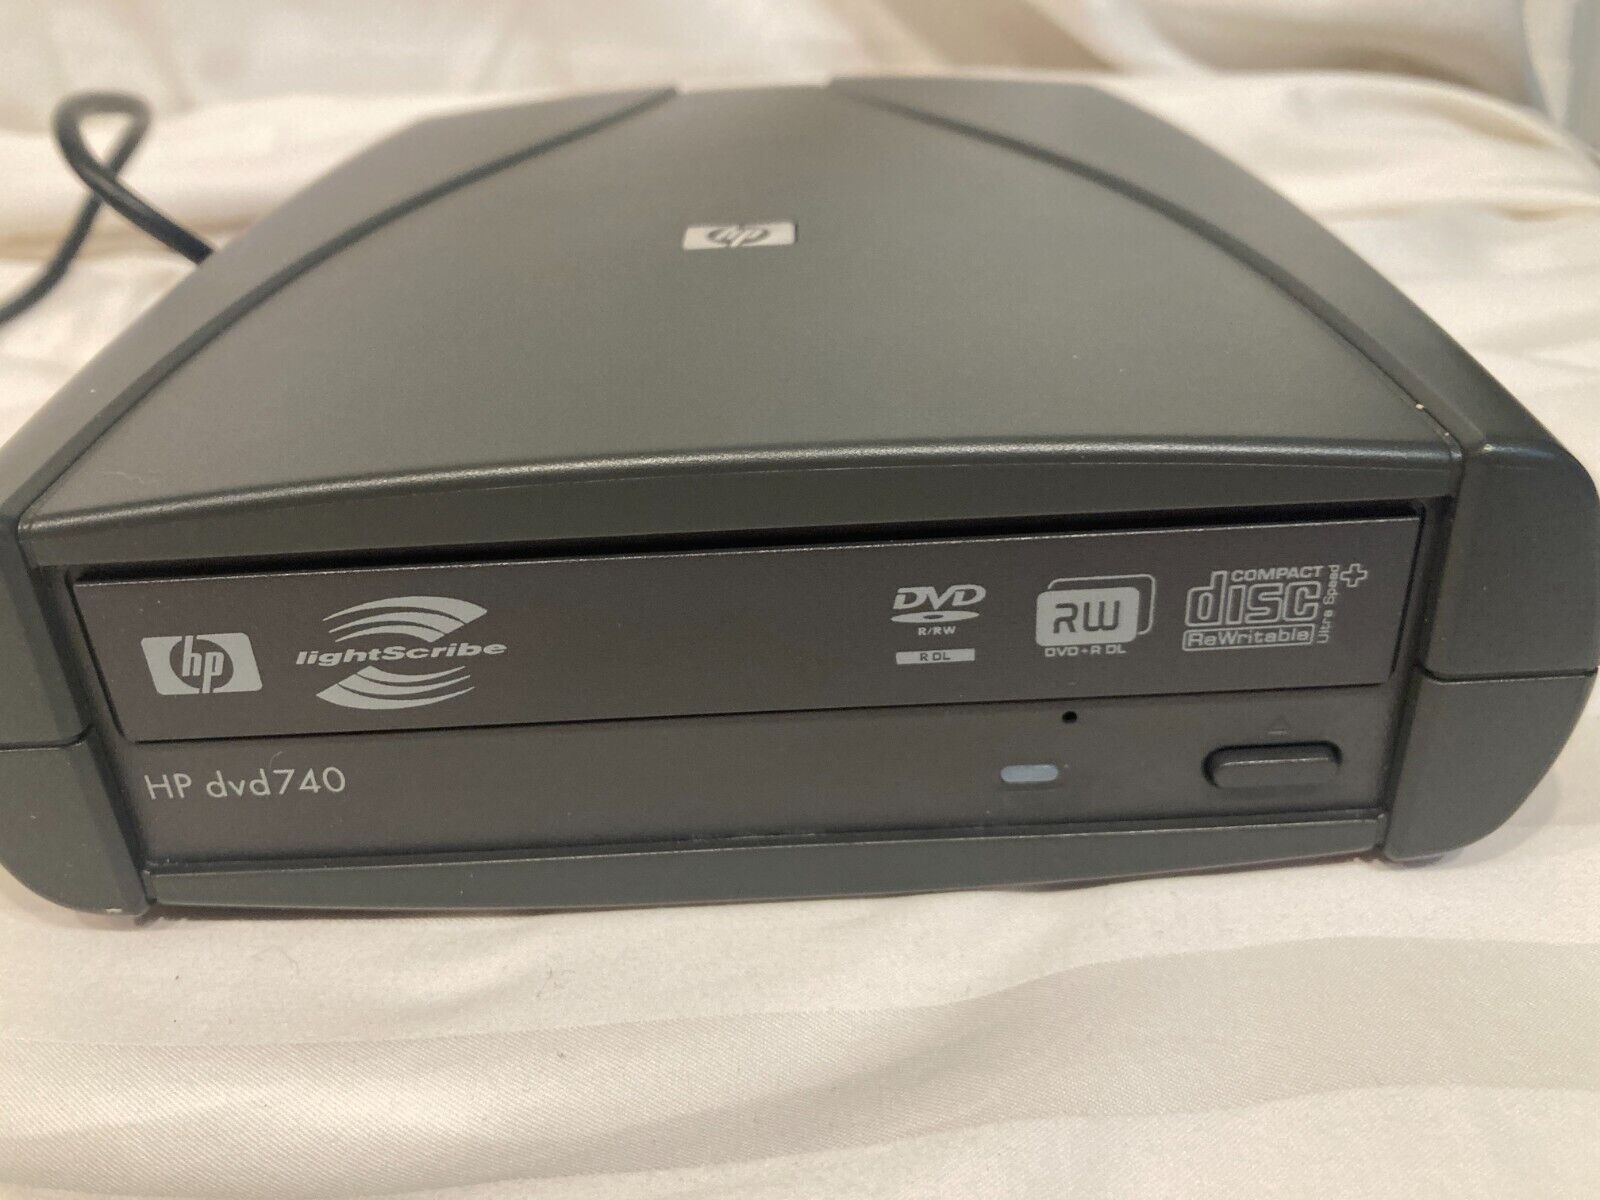 HP Dvd740 DVD/CD External Rewritable Drive - See Video - Tested GUC